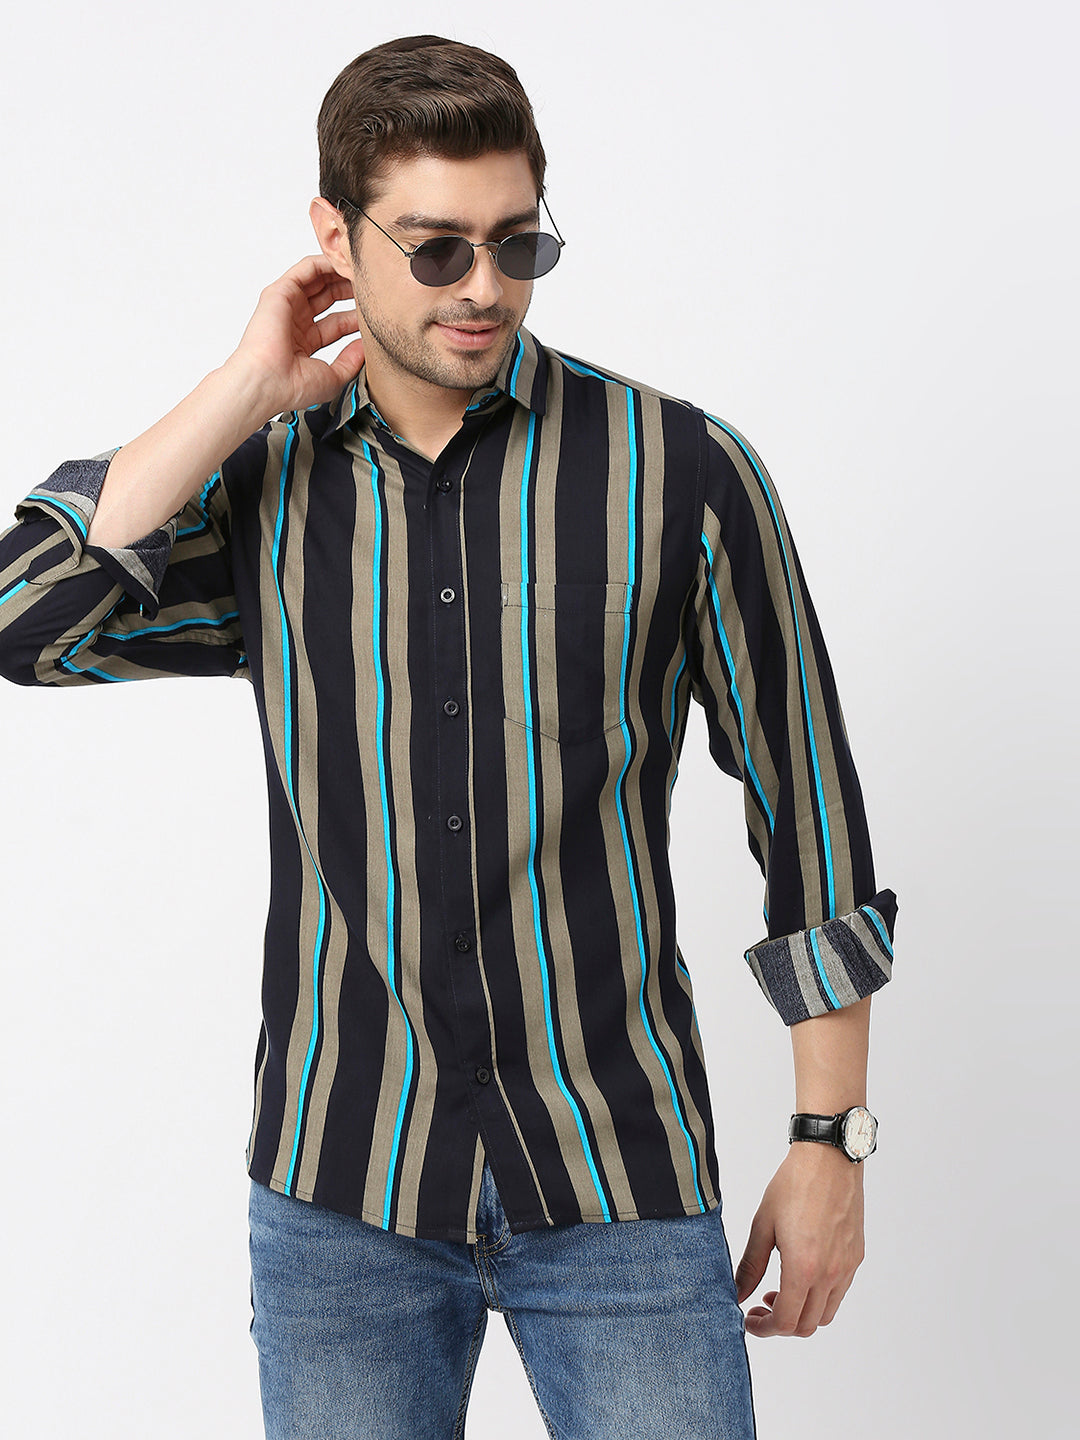 Adam Rayon Vertical Blue Stripes Shirt